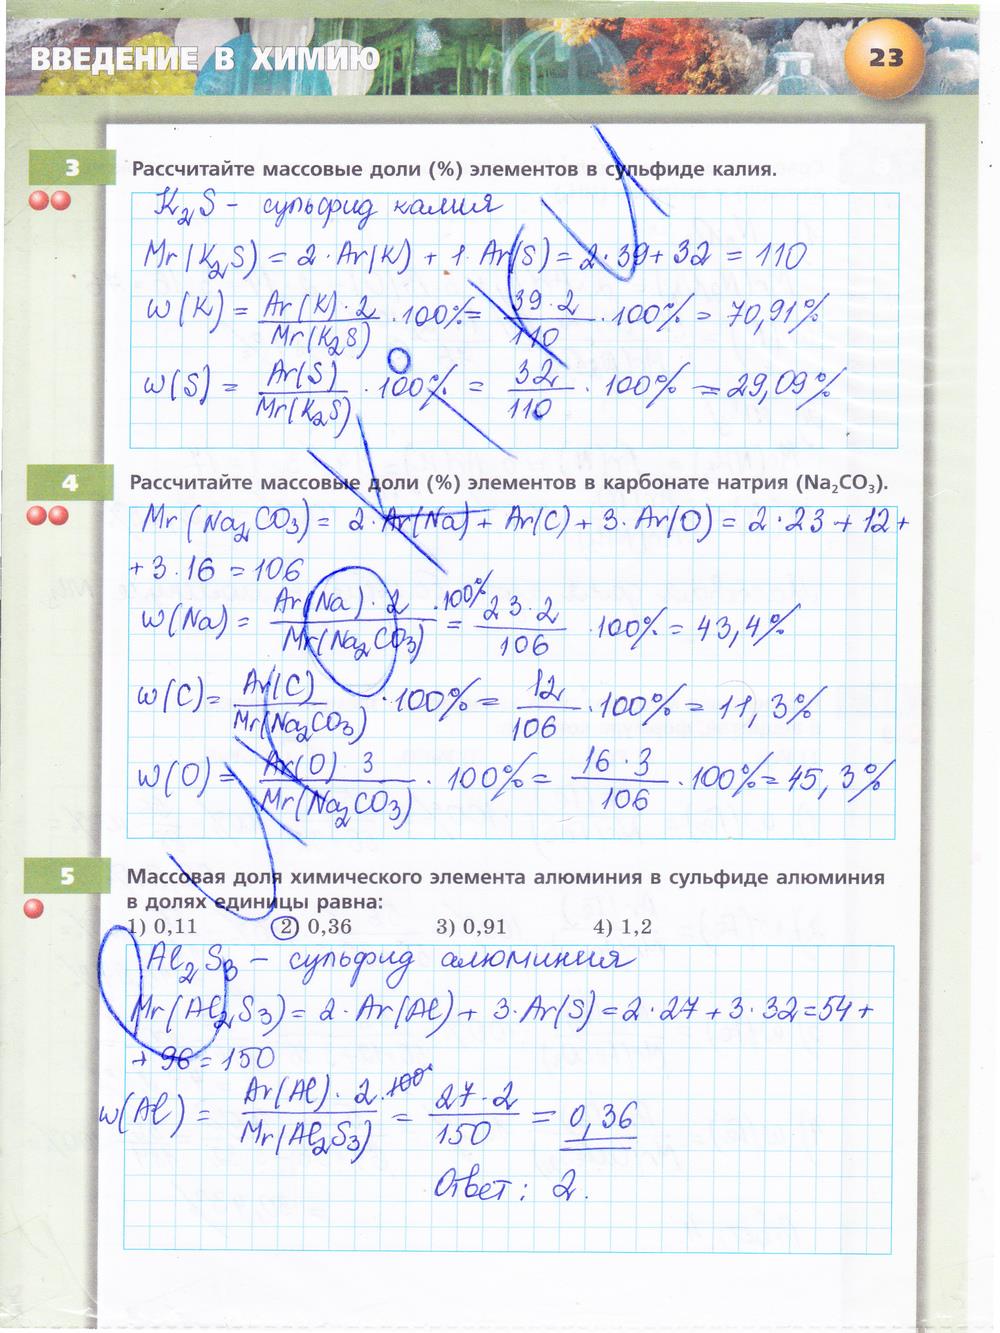 гдз 8 класс тетрадь-тренажёр страница 23 химия Гара